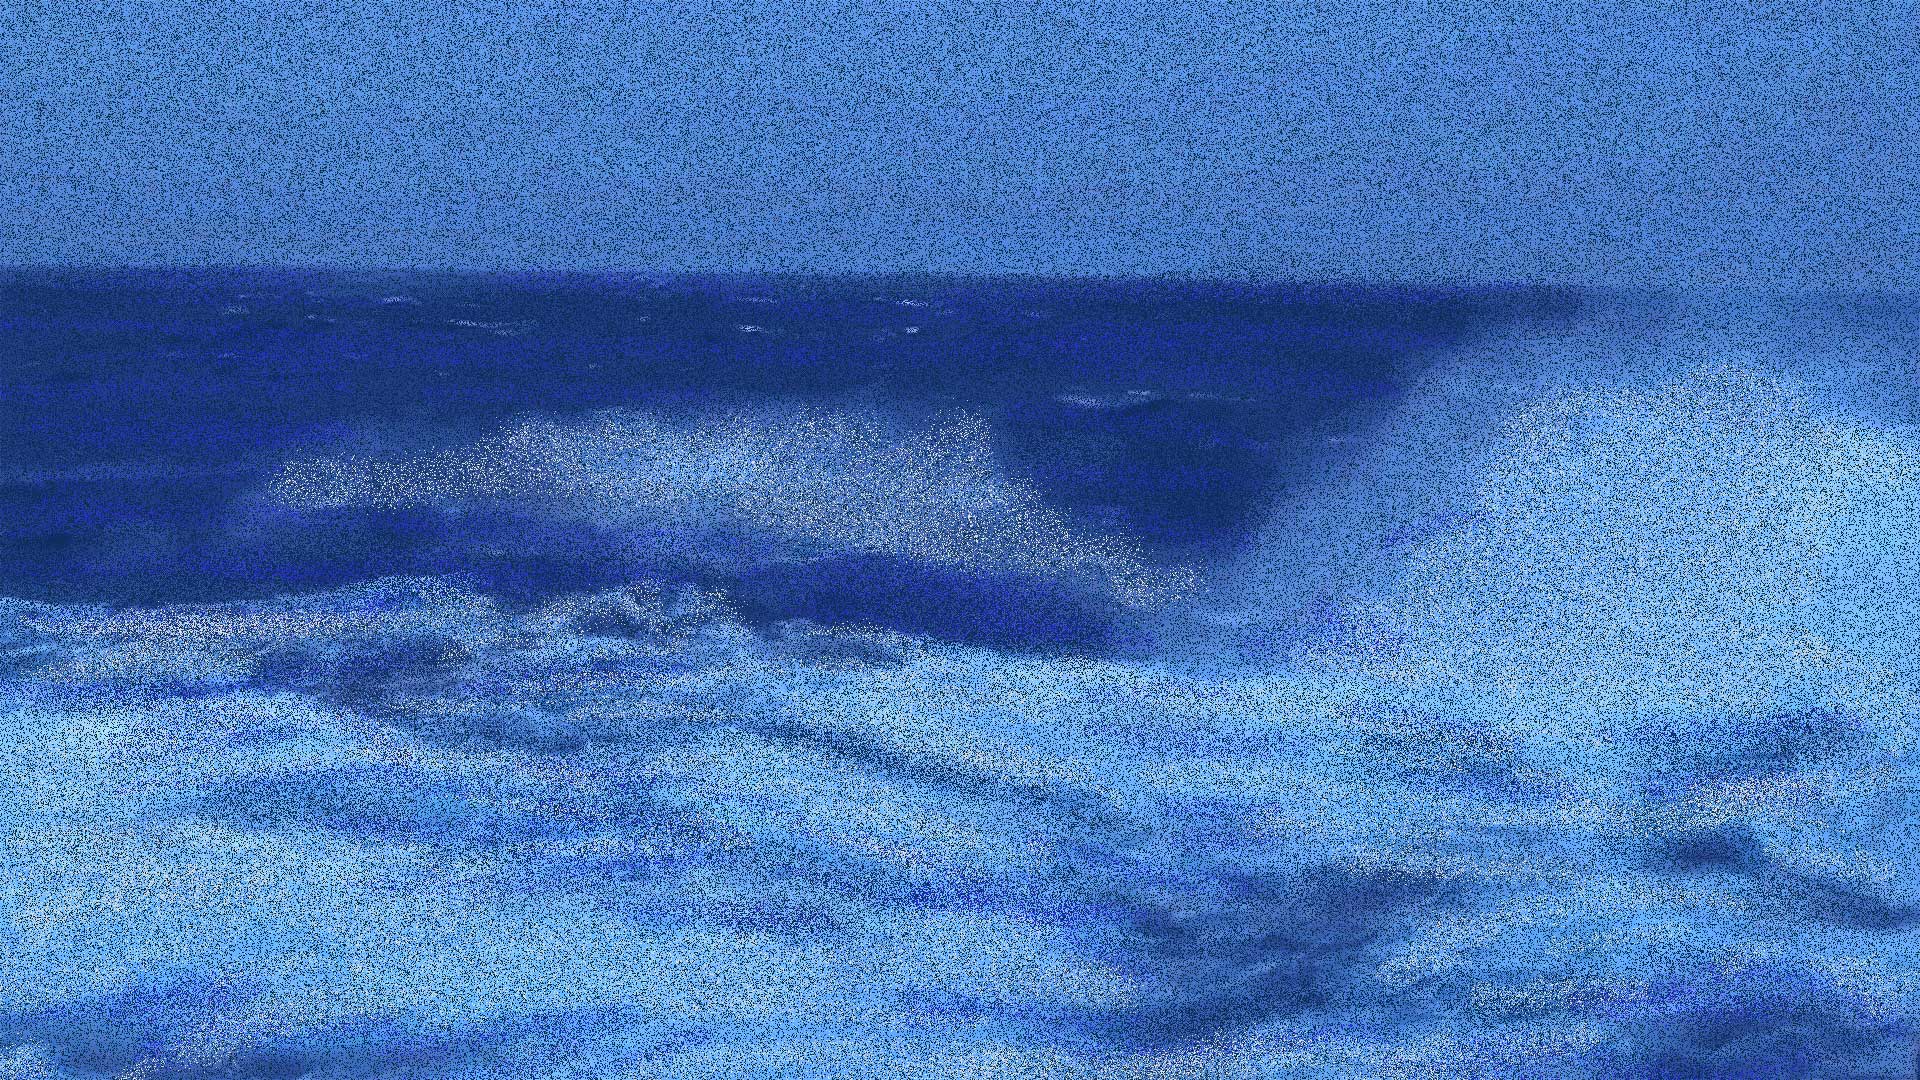 SS El Faro Postcard — Waves by Naomi B. Cook